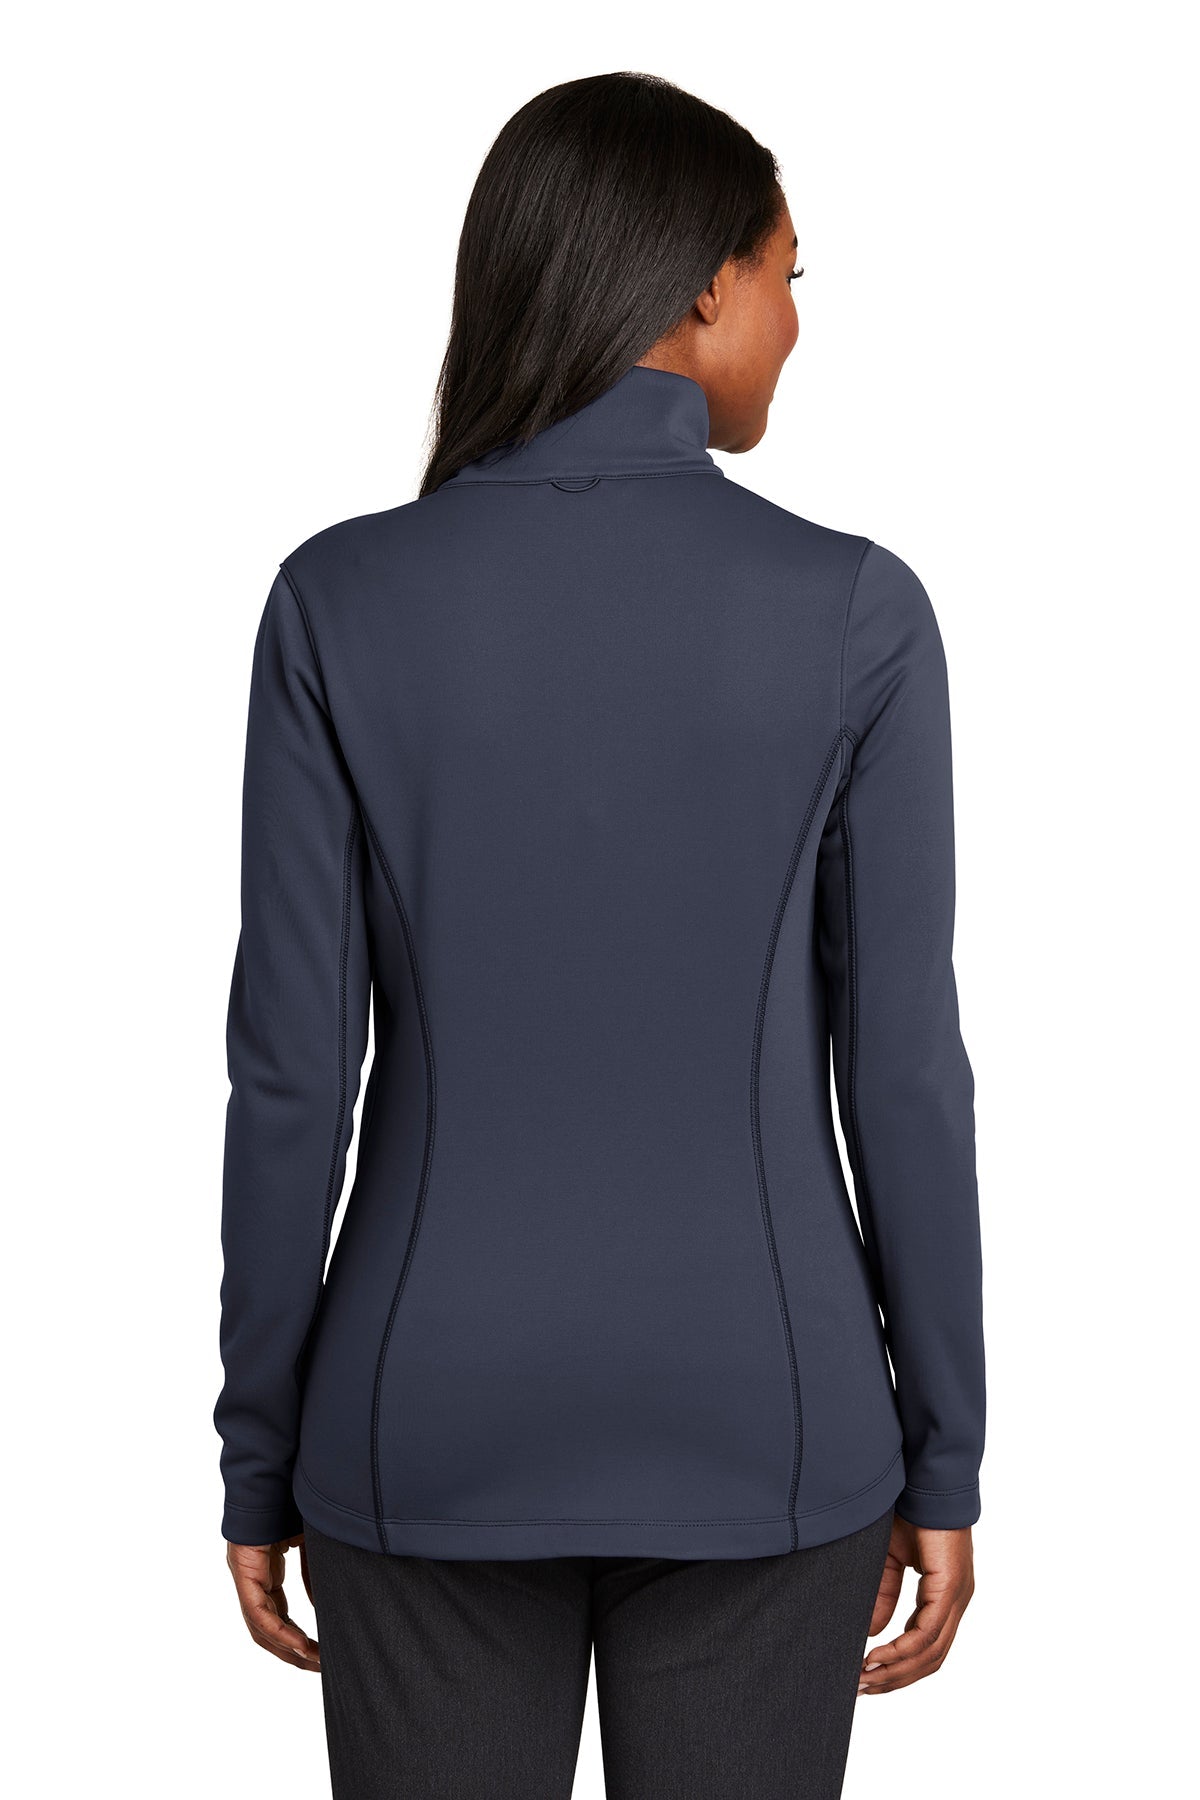 L904 Port Authority ® Ladies Collective Smooth Fleece Jacket